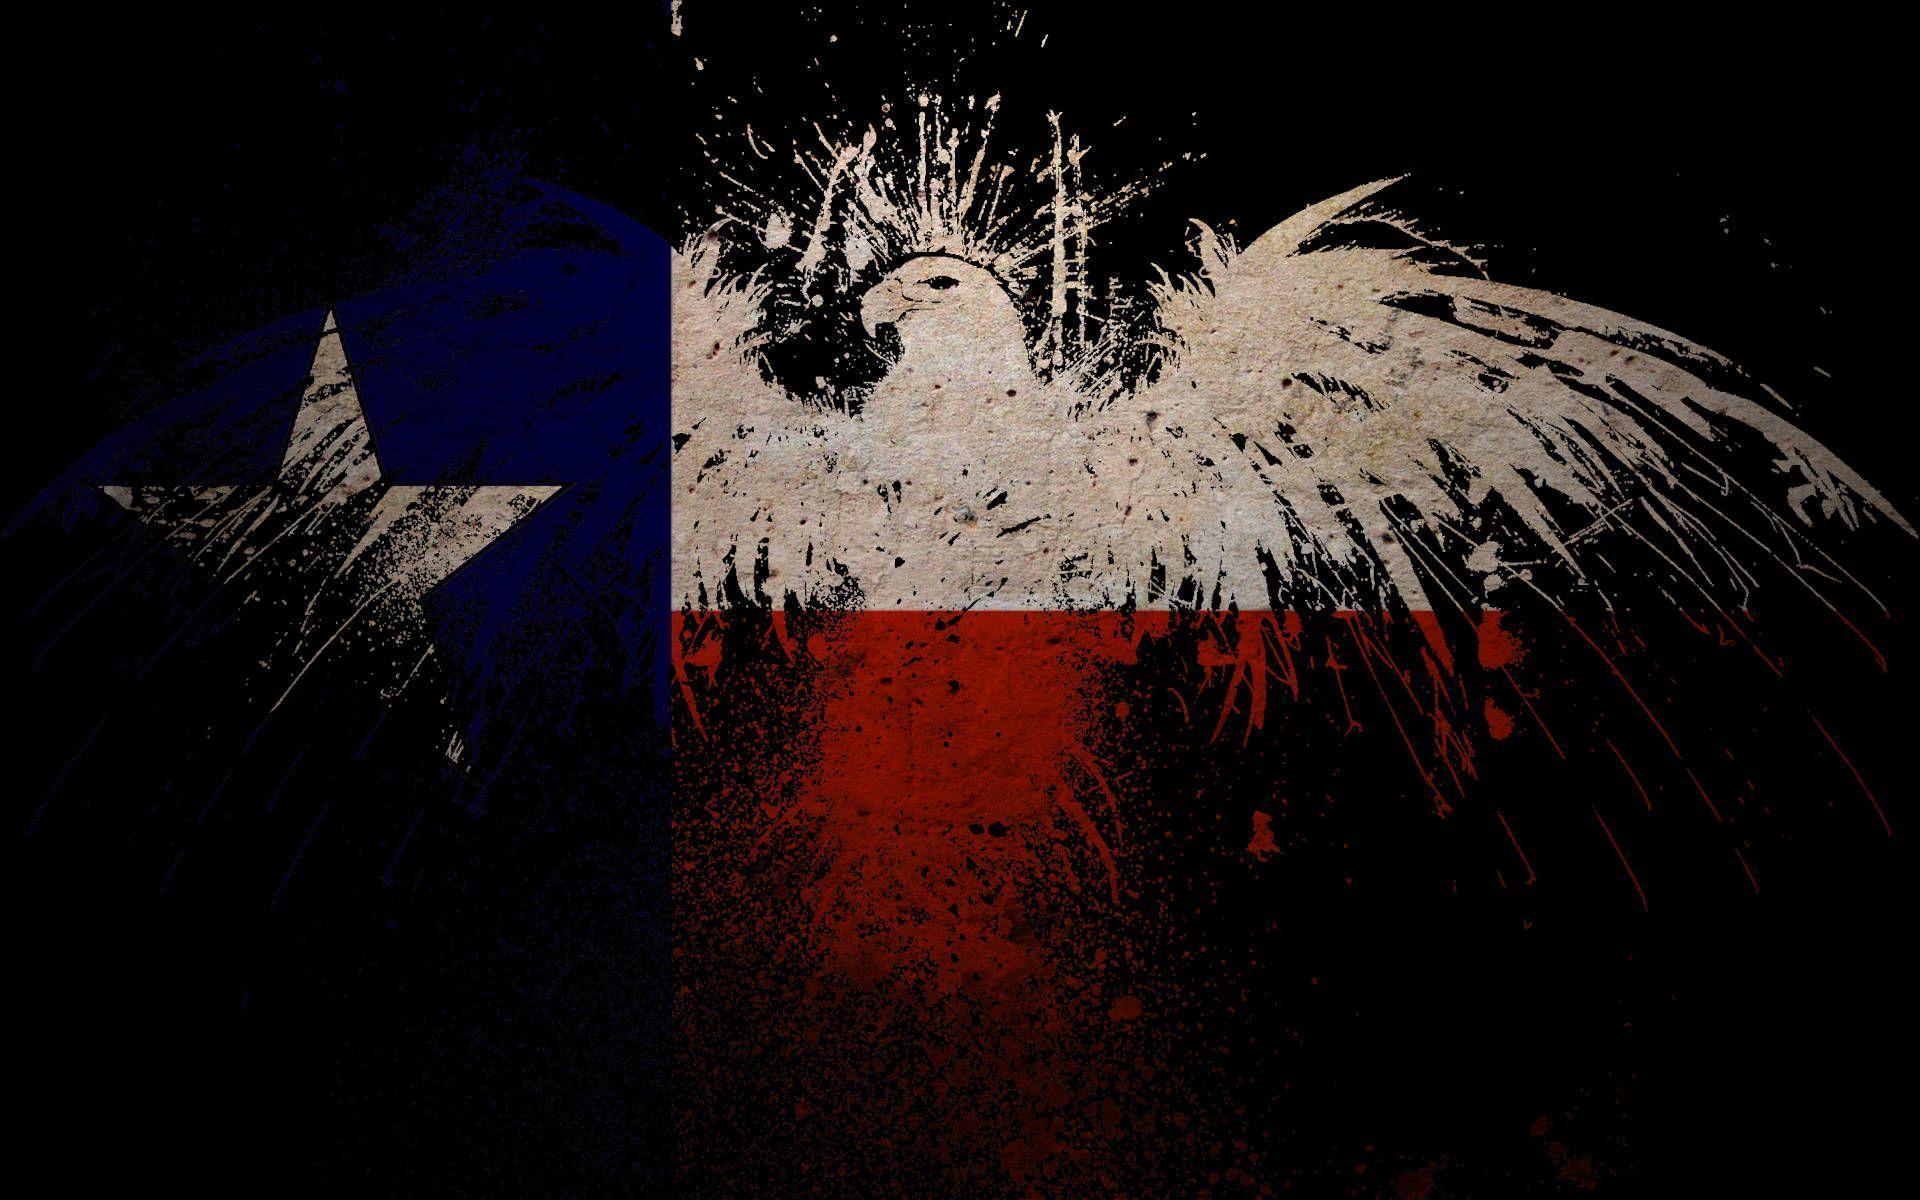 Free Texas Flag Wallpaper, HDQ Texas Flag Image Collection